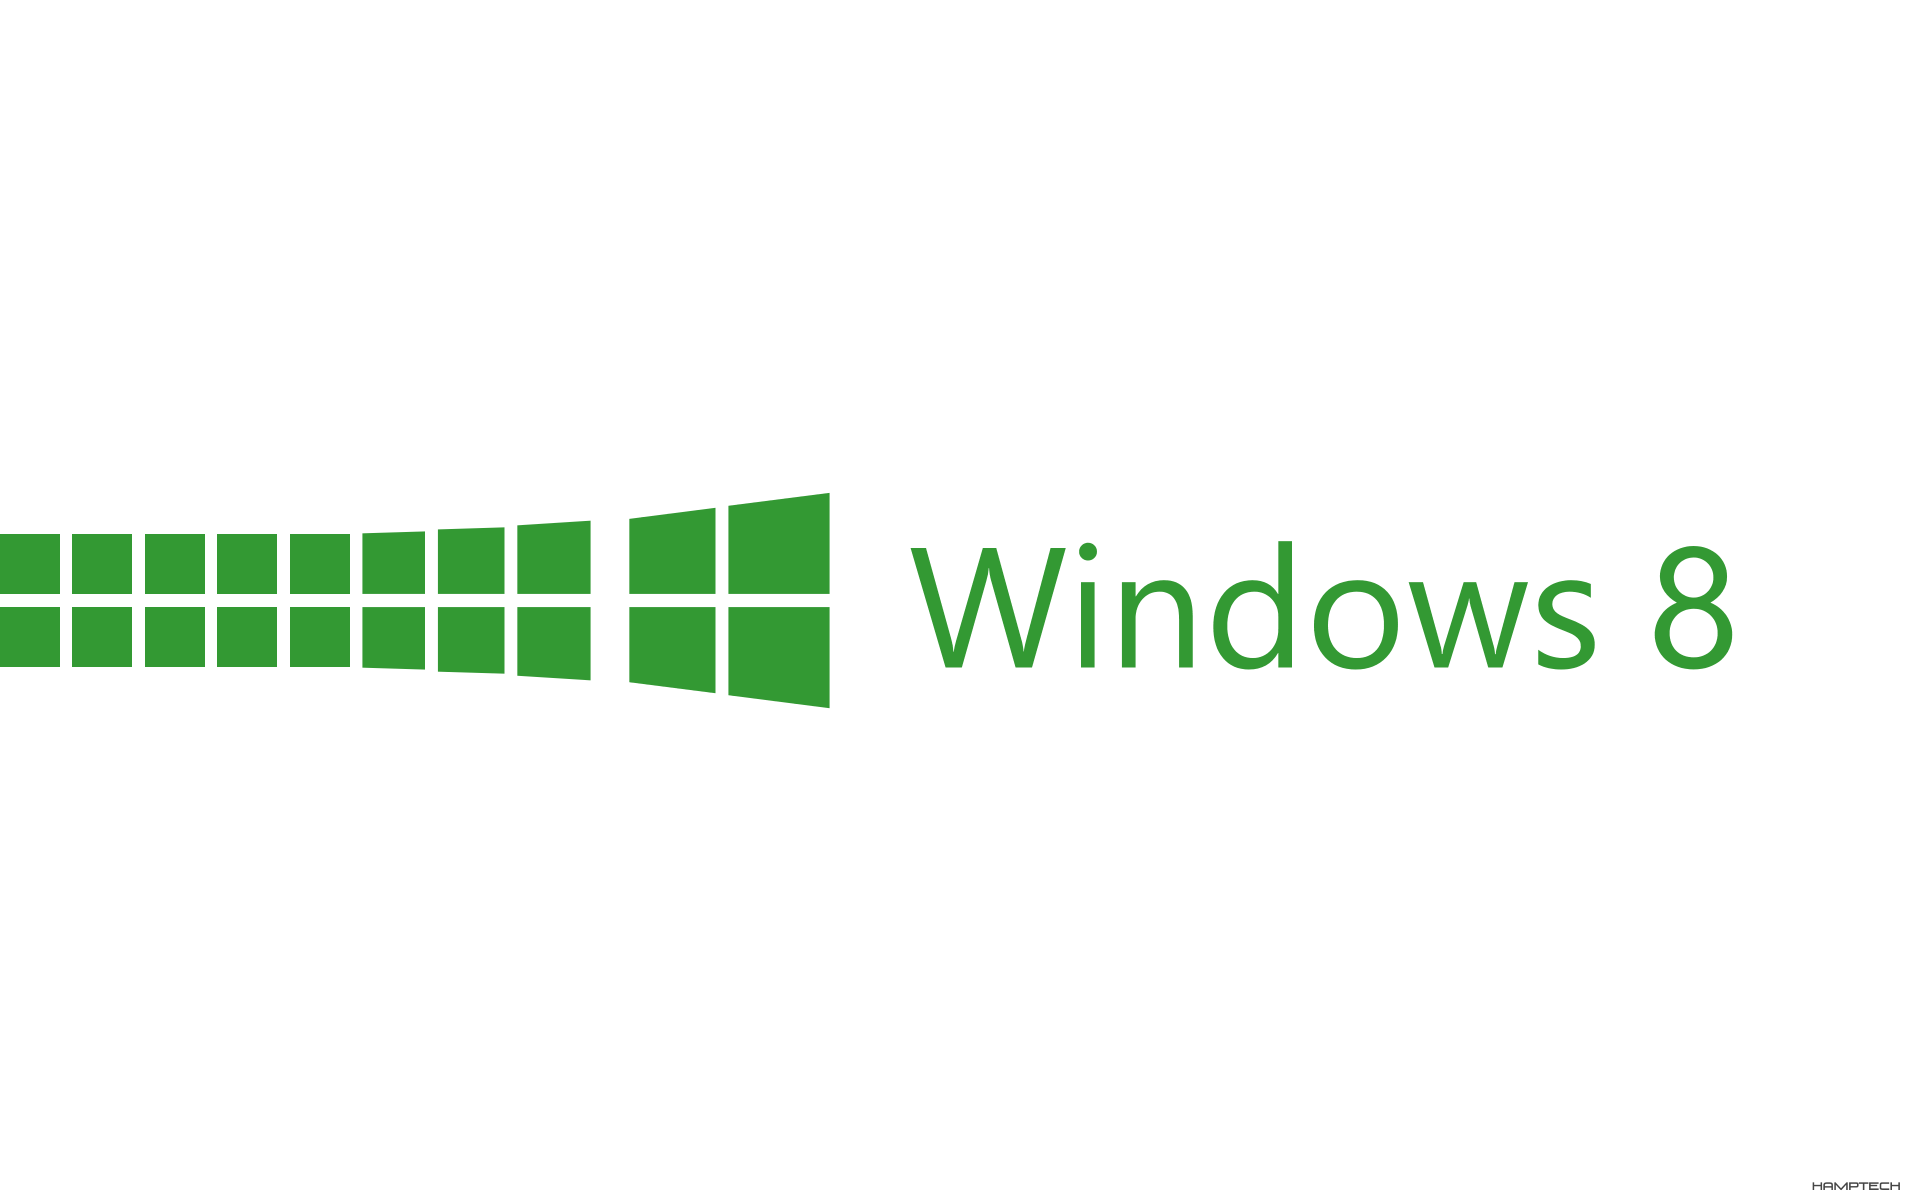 WP7-GREEN_whitebg_Windows8Wallpaper_byHamptech.png